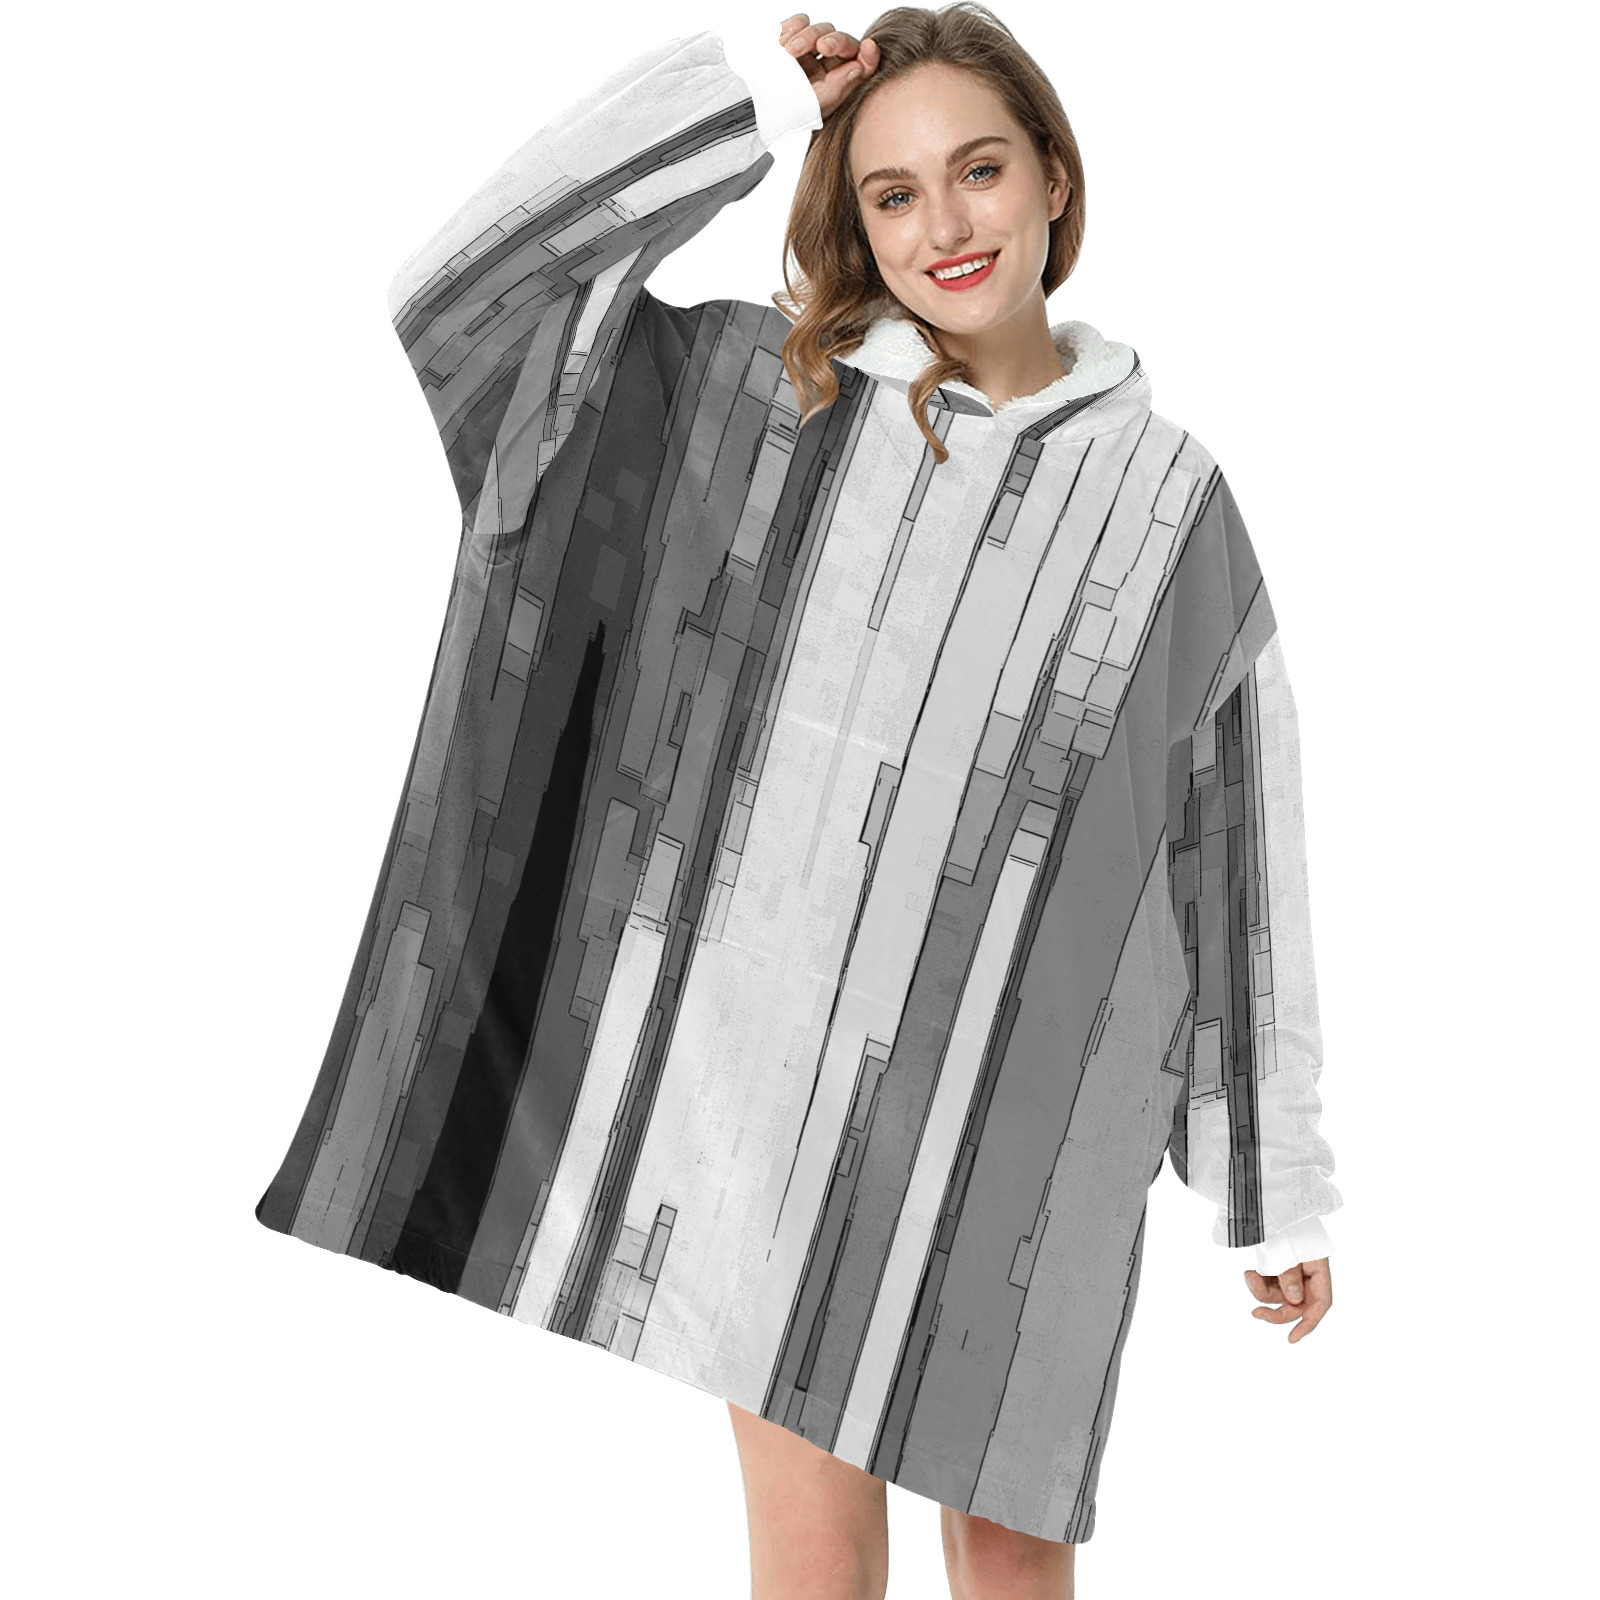 Greyscale Abstract B&W Art Blanket Hoodie for Women